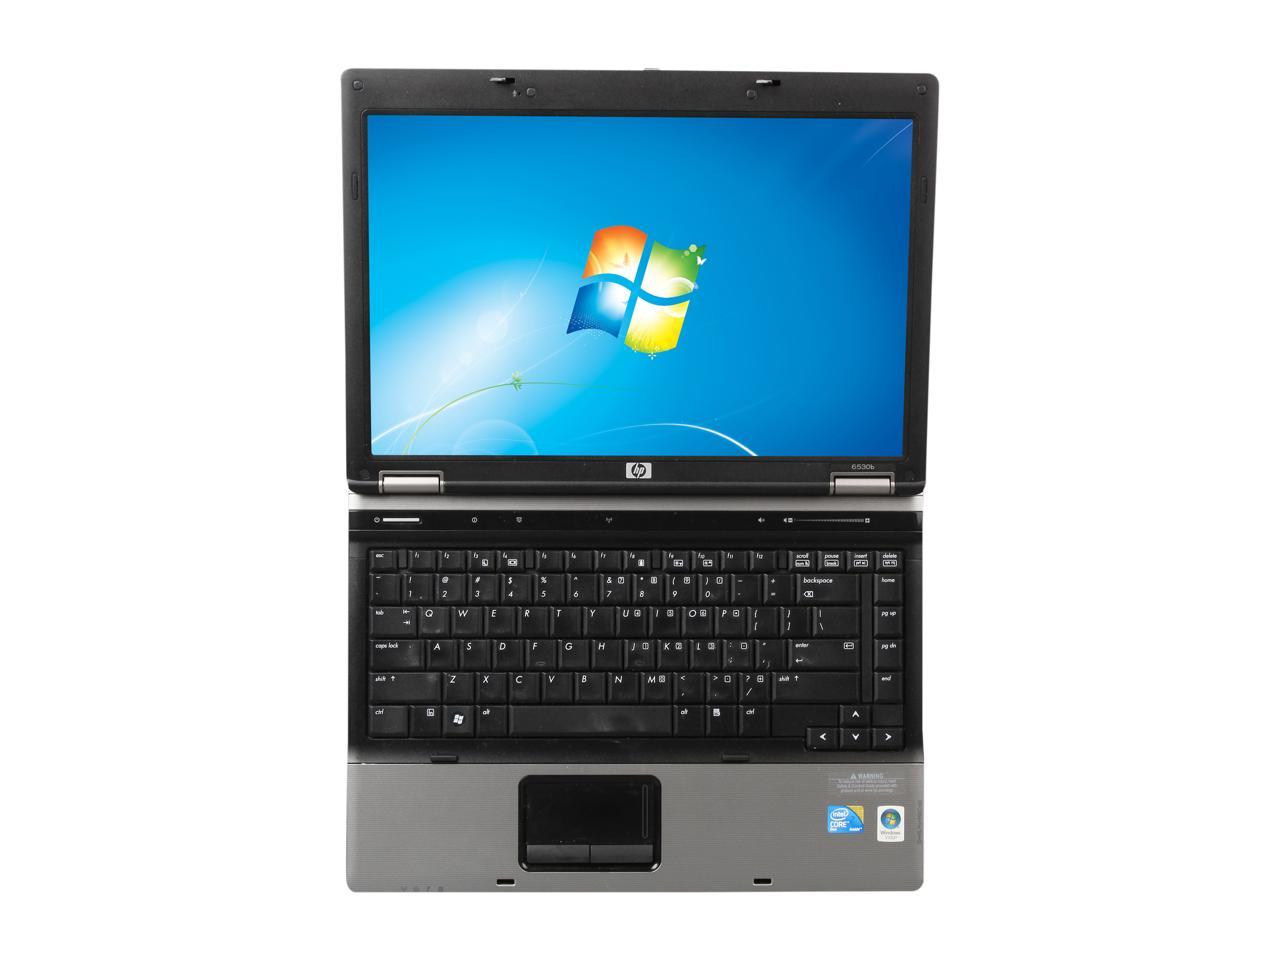 Refurbished Hp Laptop Compaq 6530b Intel Core 2 Duo T9600 2 80 Ghz 2 Gb Memory 160 Gb Hdd 160 Gb Ssd 14 1 Windows 7 Home Premium Newegg Com